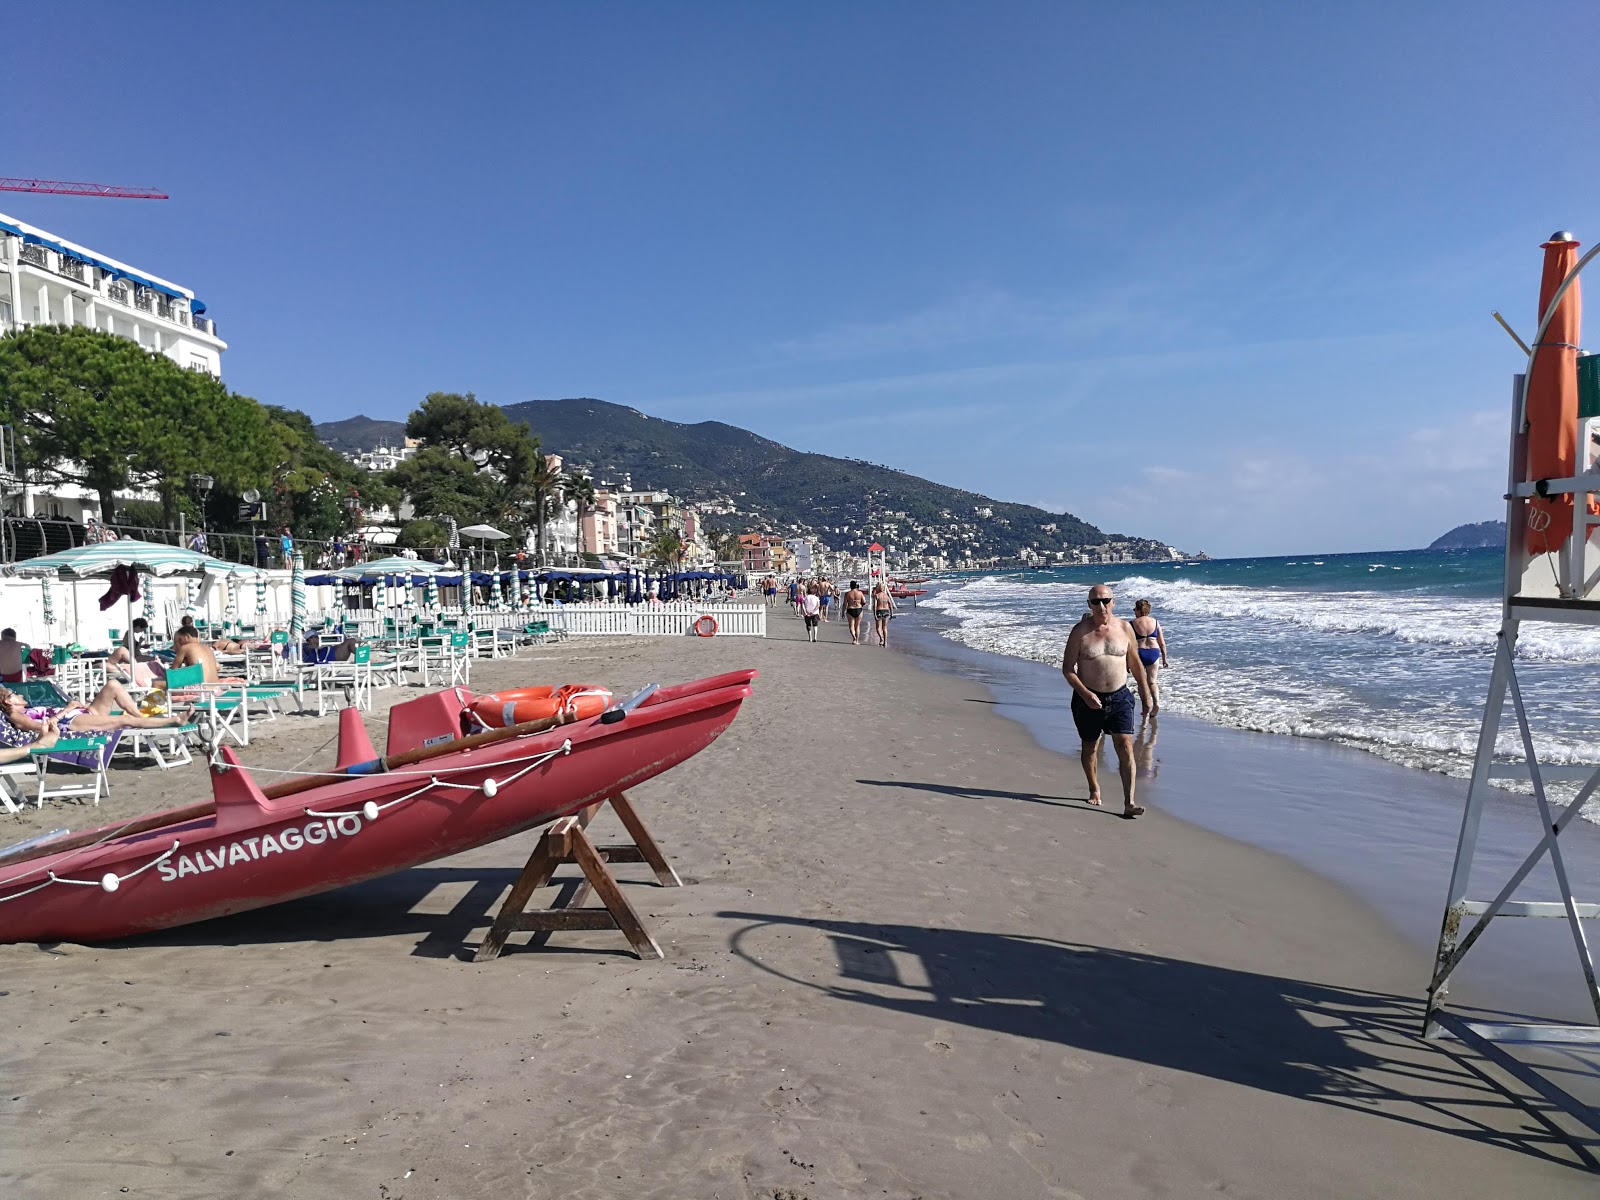 Fotografie cu Spiaggia Attrezzata sprijinit de stânci